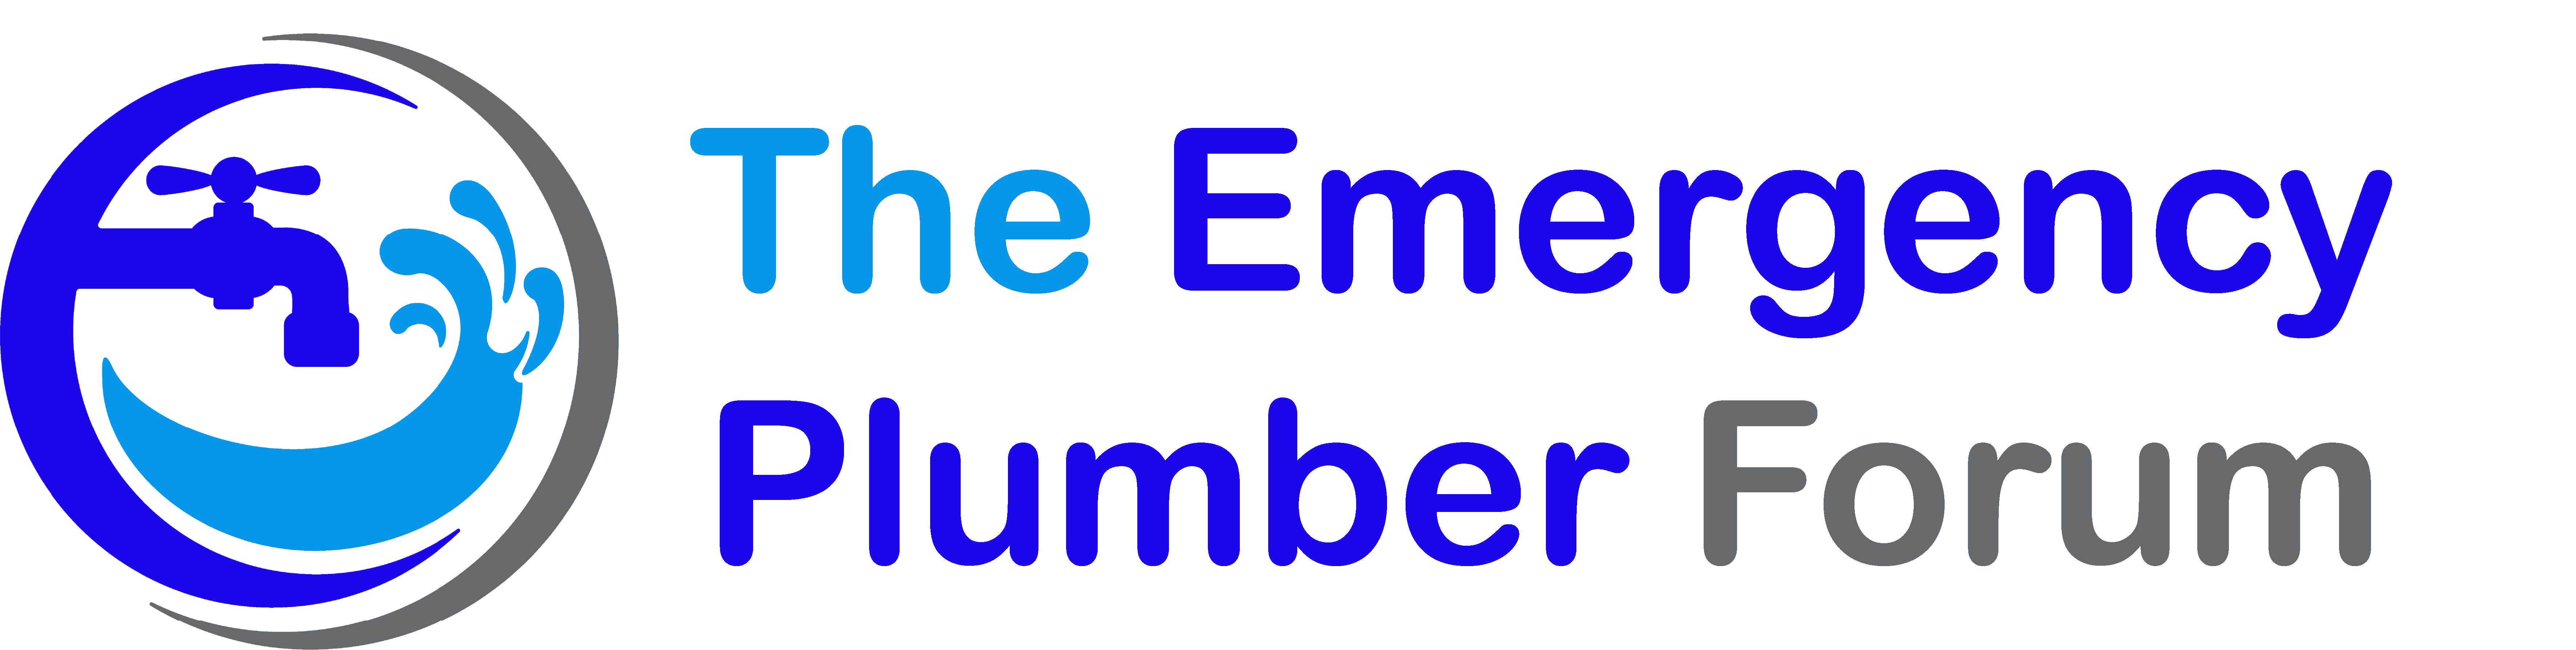 The Emergency Plumber Forum